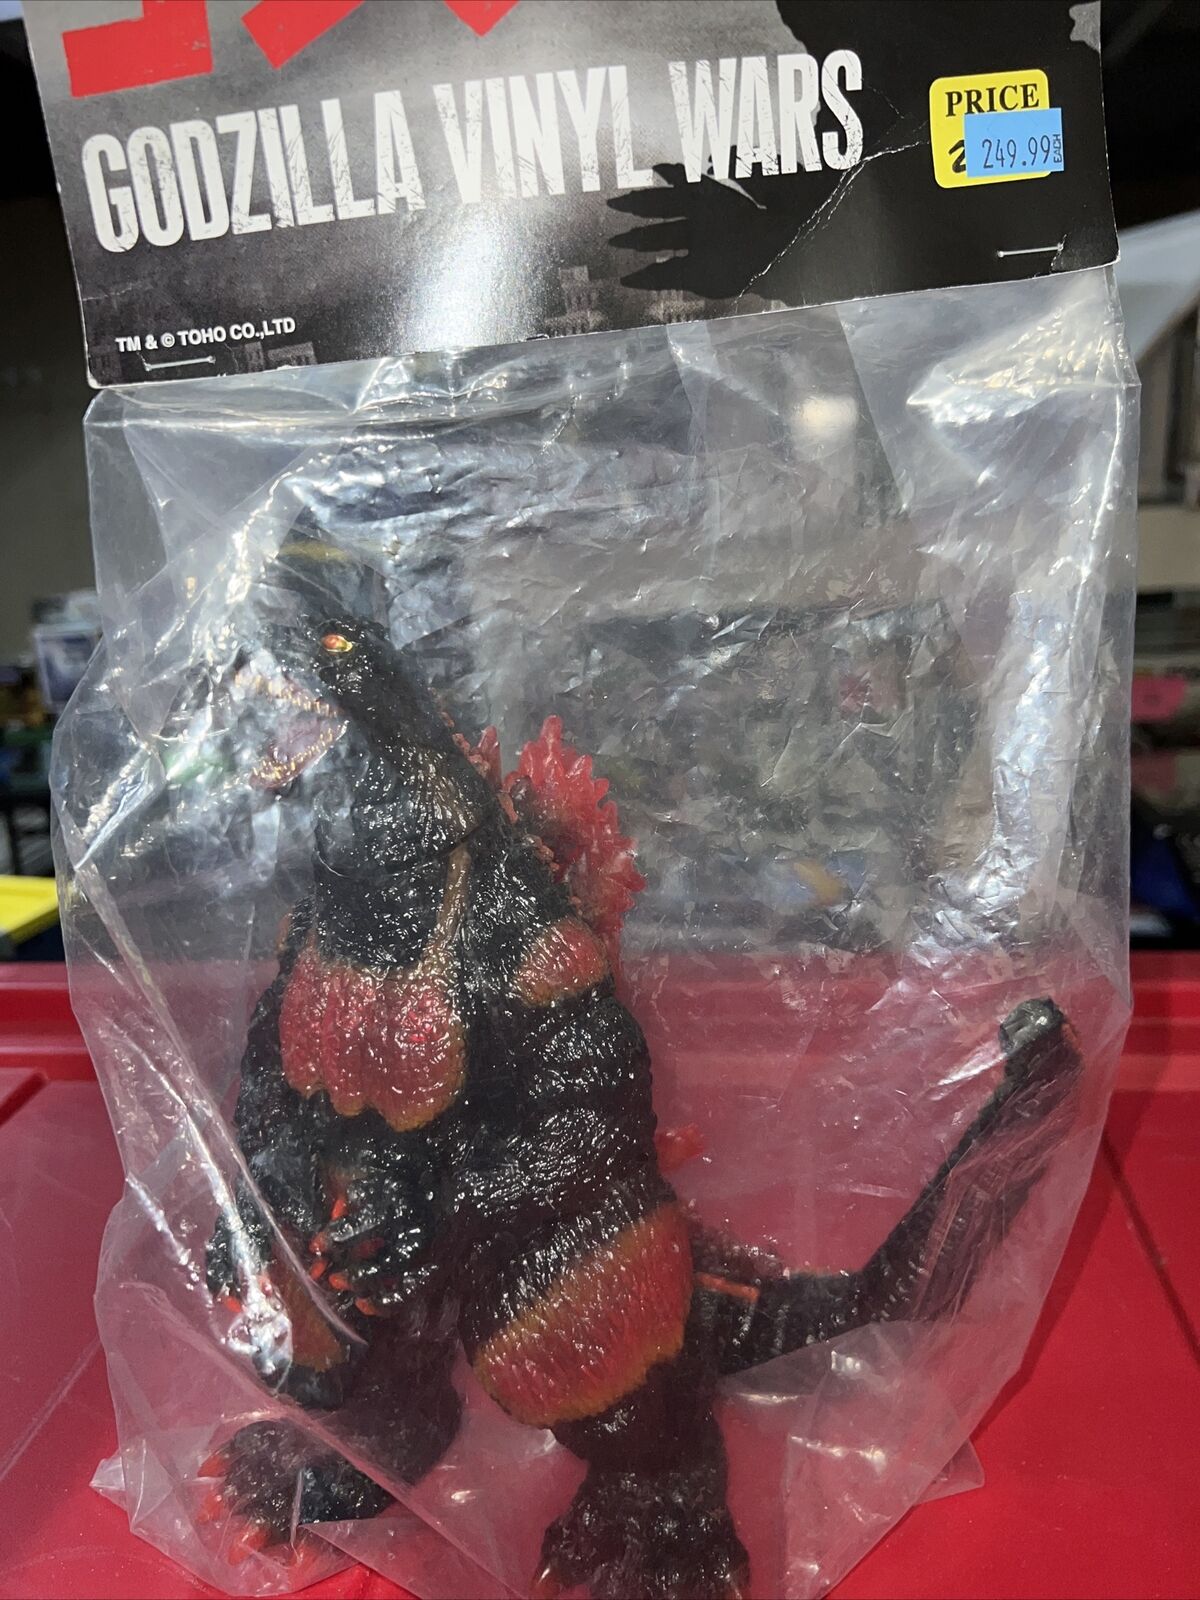 Medicom Toy Shin Godzilla Vinyl Wars DCon exclusive